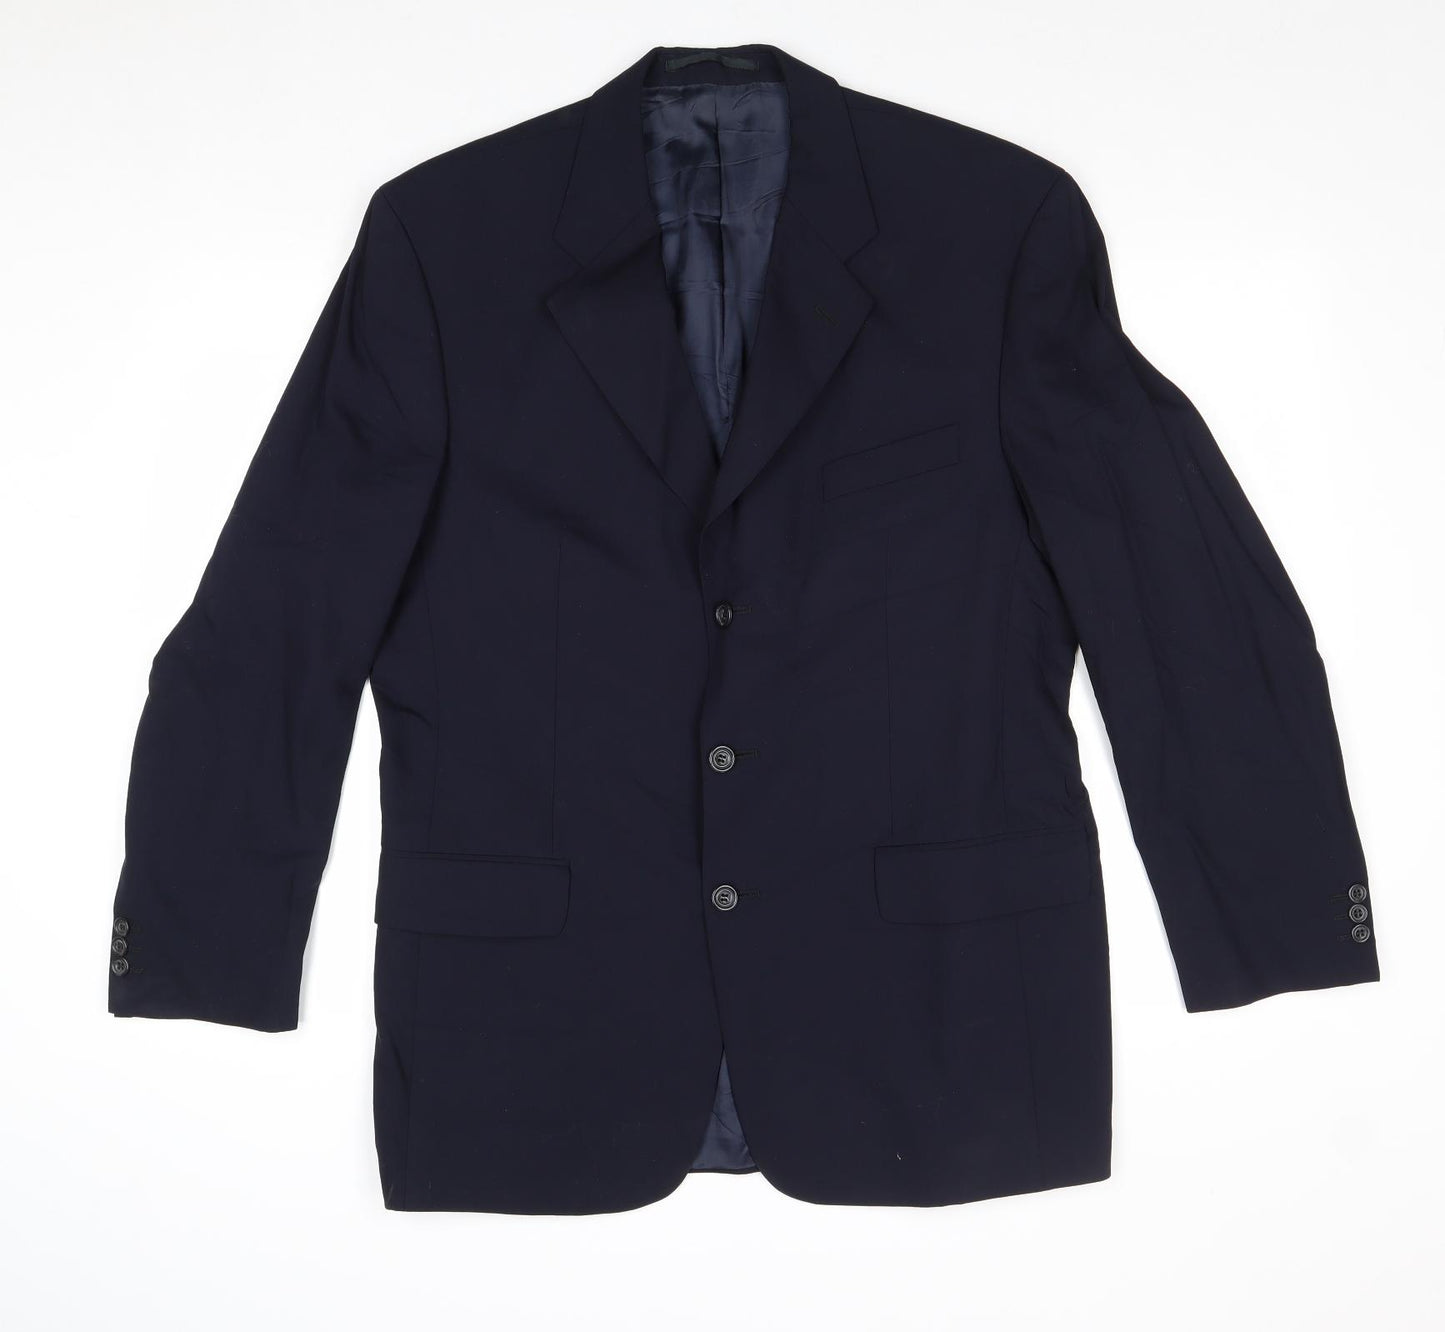 Woolmark Mens Blue Wool Jacket Suit Jacket Size 40 Regular